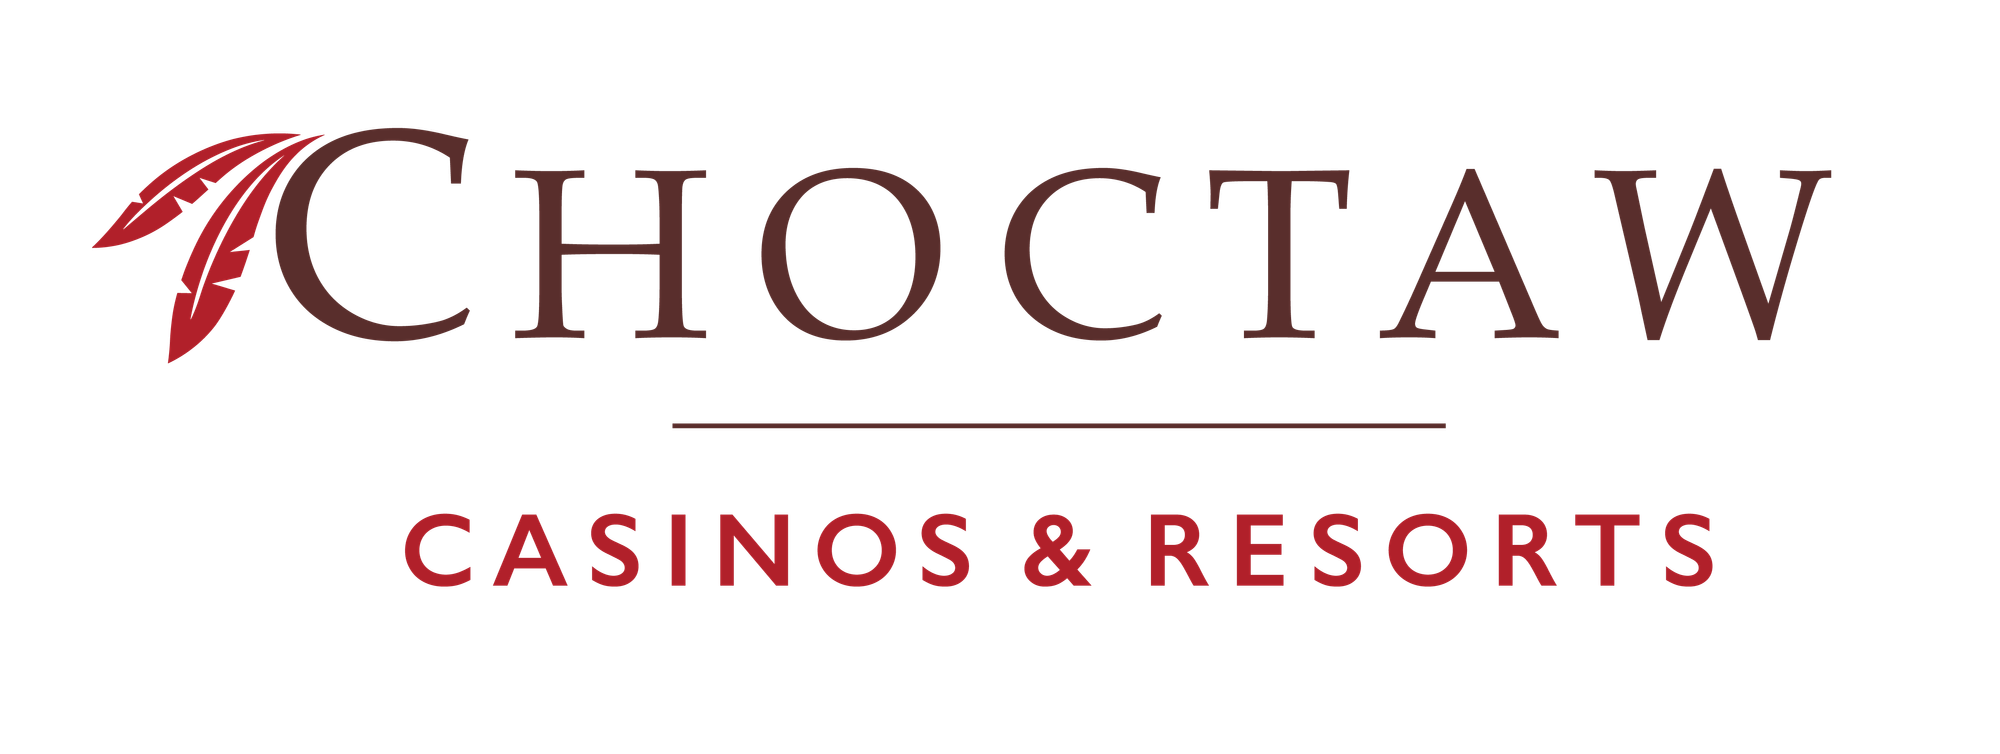 choctaw casino durant ok resort price line